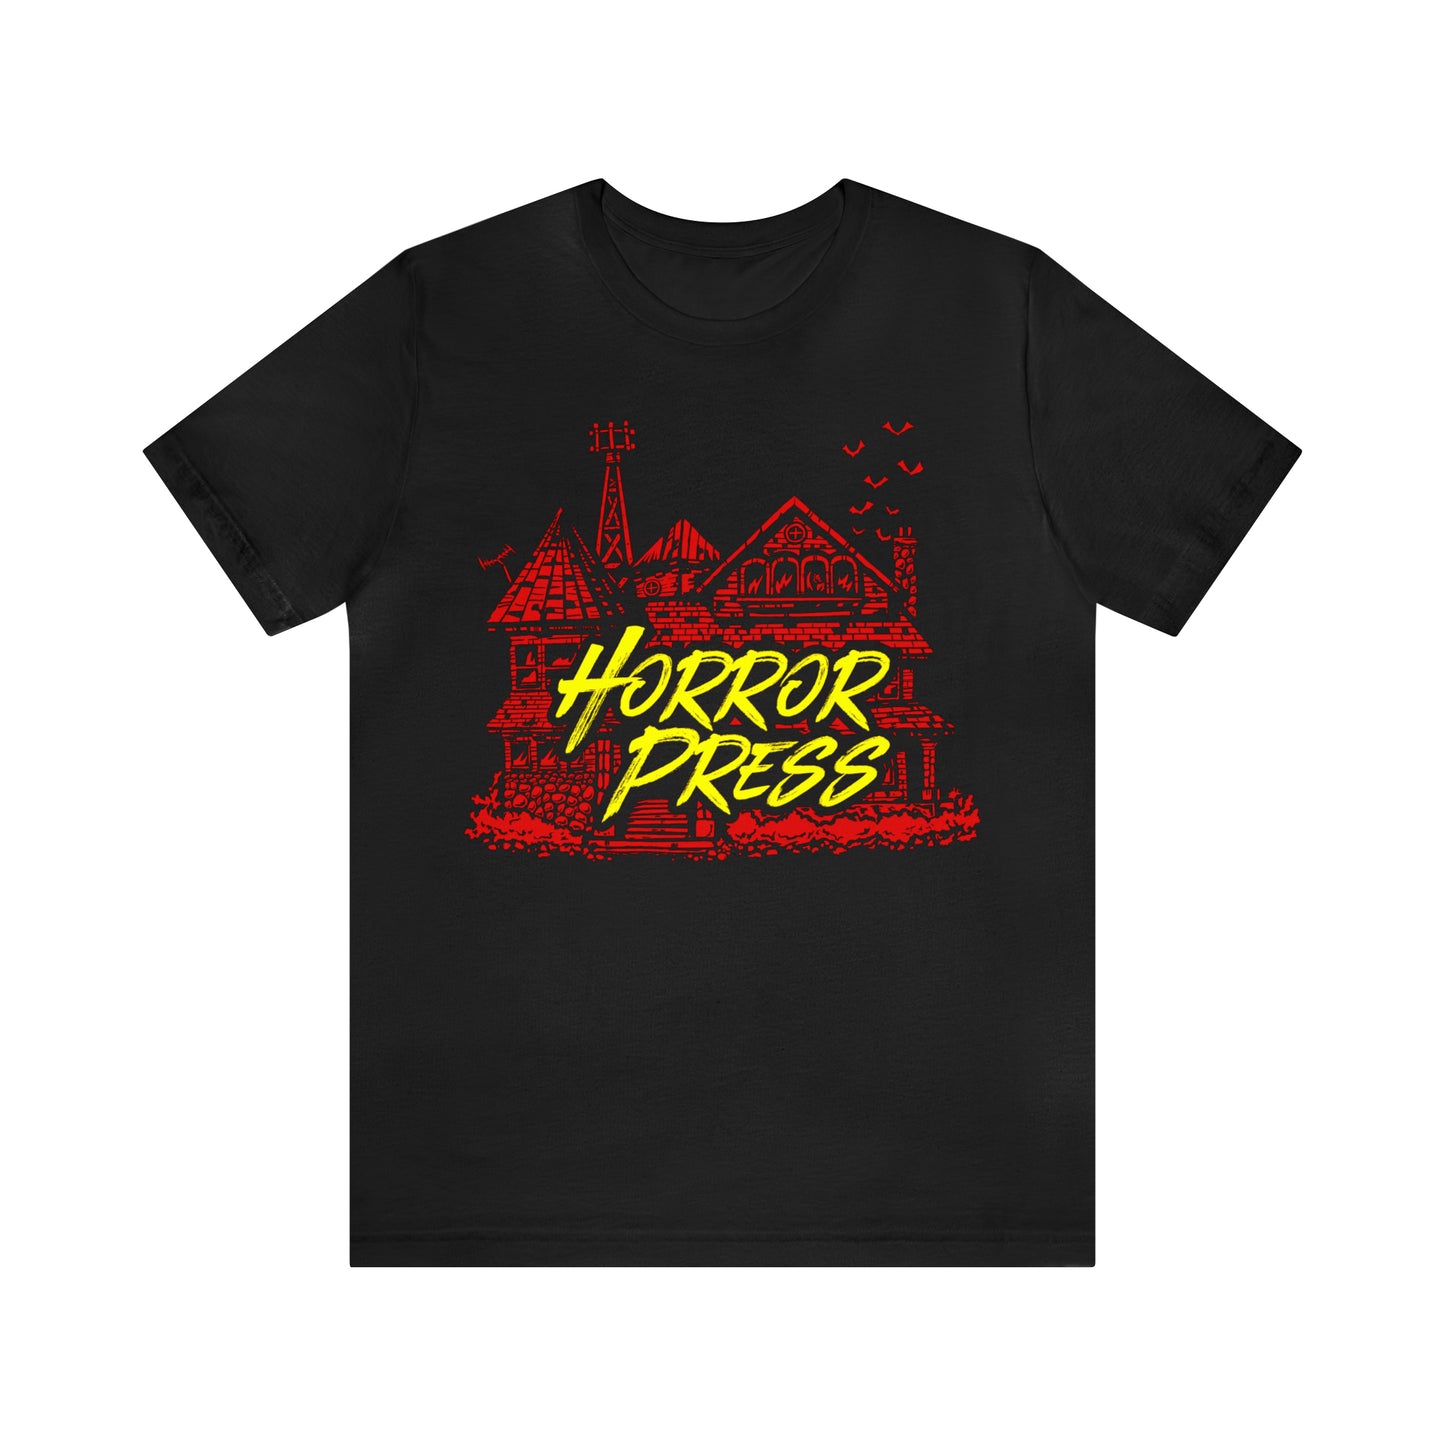 Official Horror Press T-Shirt - Horror Press Unisex Tee - Horror Movie Fan Gift  - Horror Press Horror Fan Shirt - Scary Movie Fan Shirt - Horror Game Fan Tee - Red on Black T-Shirt